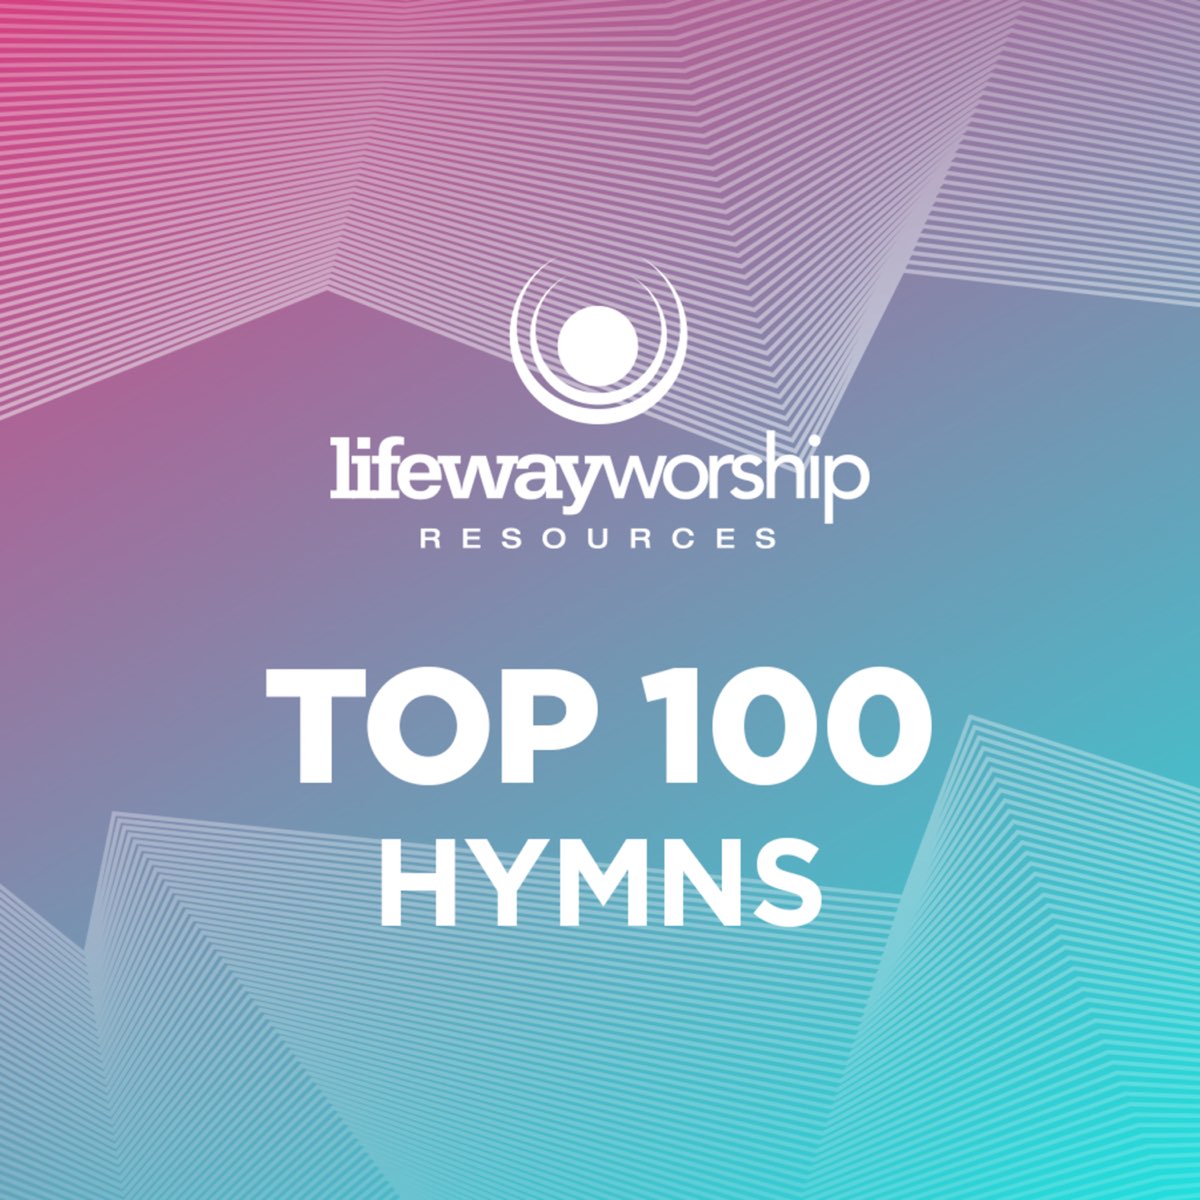 ‎Top 100 Hymns Album by LifeWay Worship Apple Music